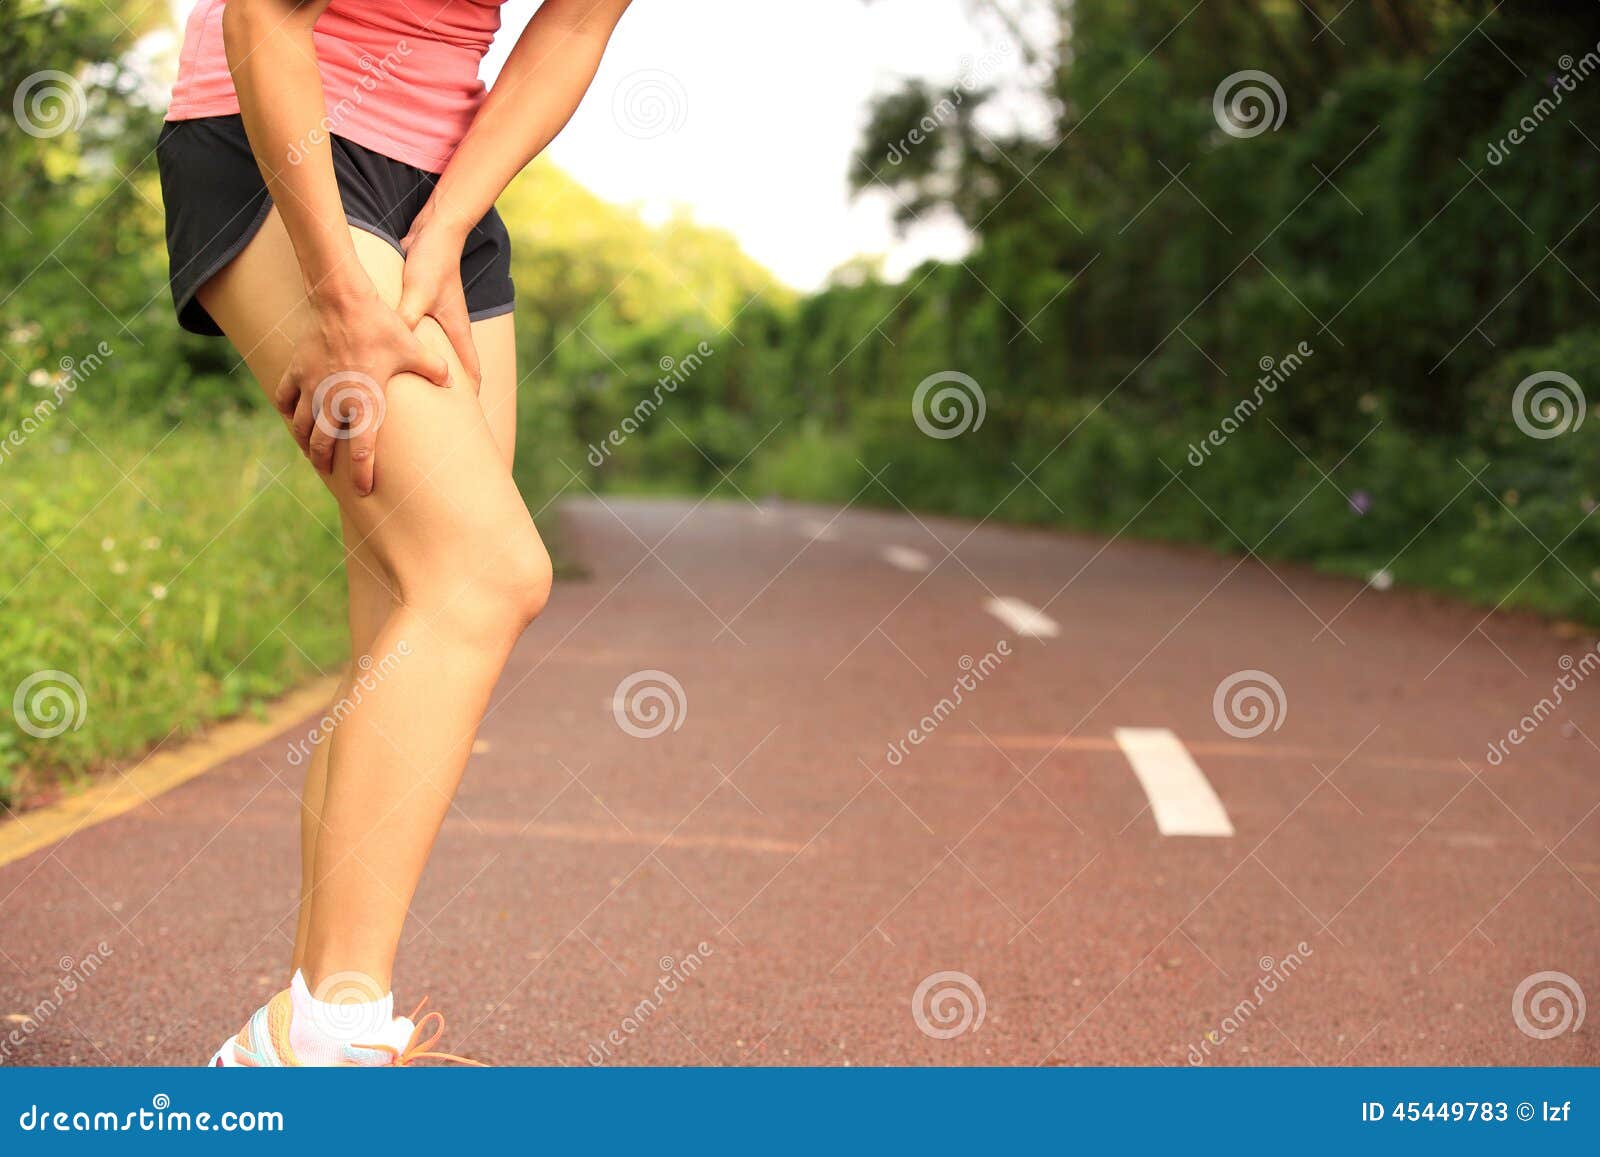 woman runner holder her sports injured legs